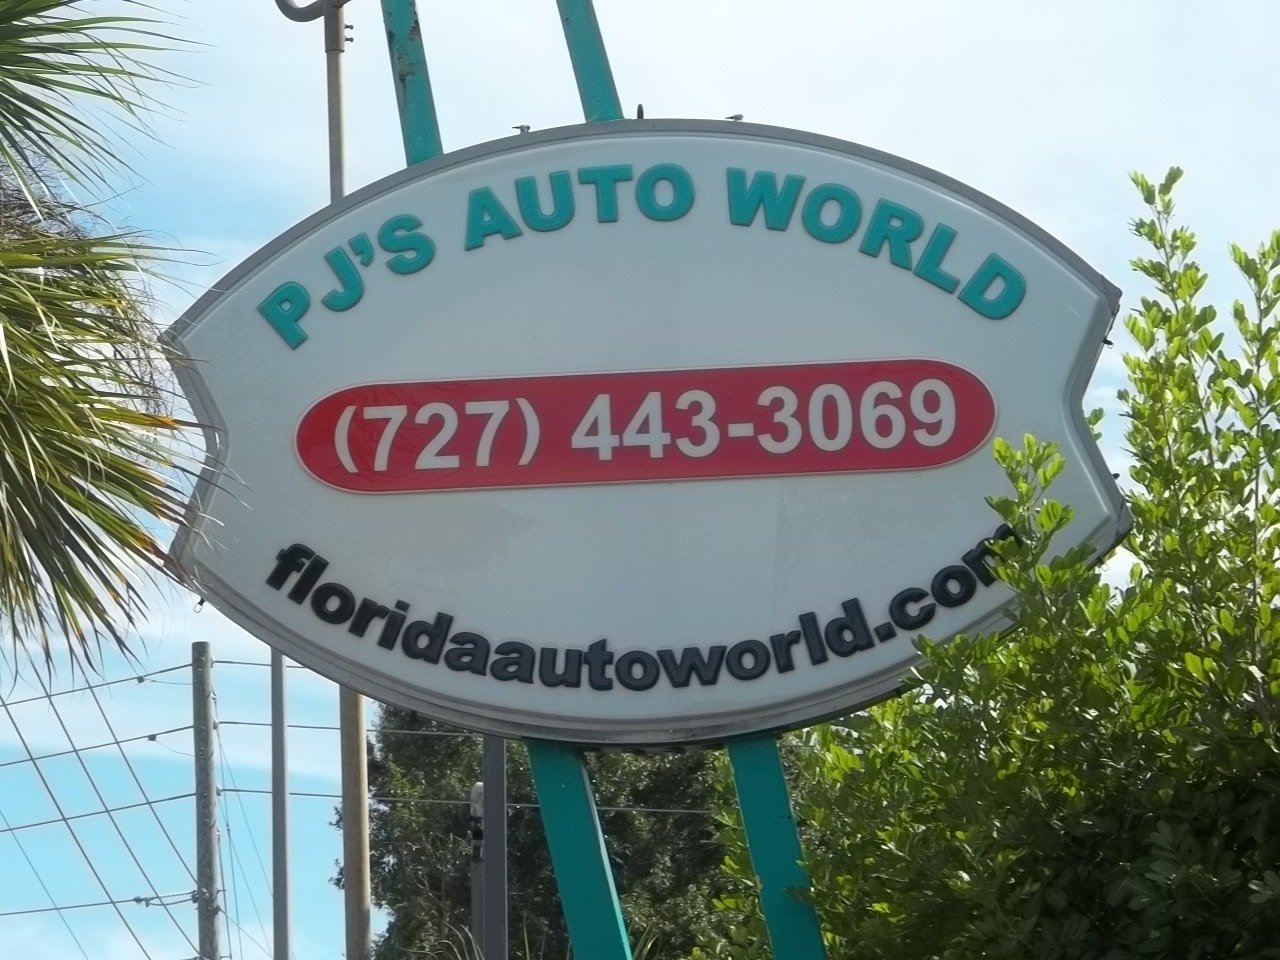 PJ's Auto World Inc